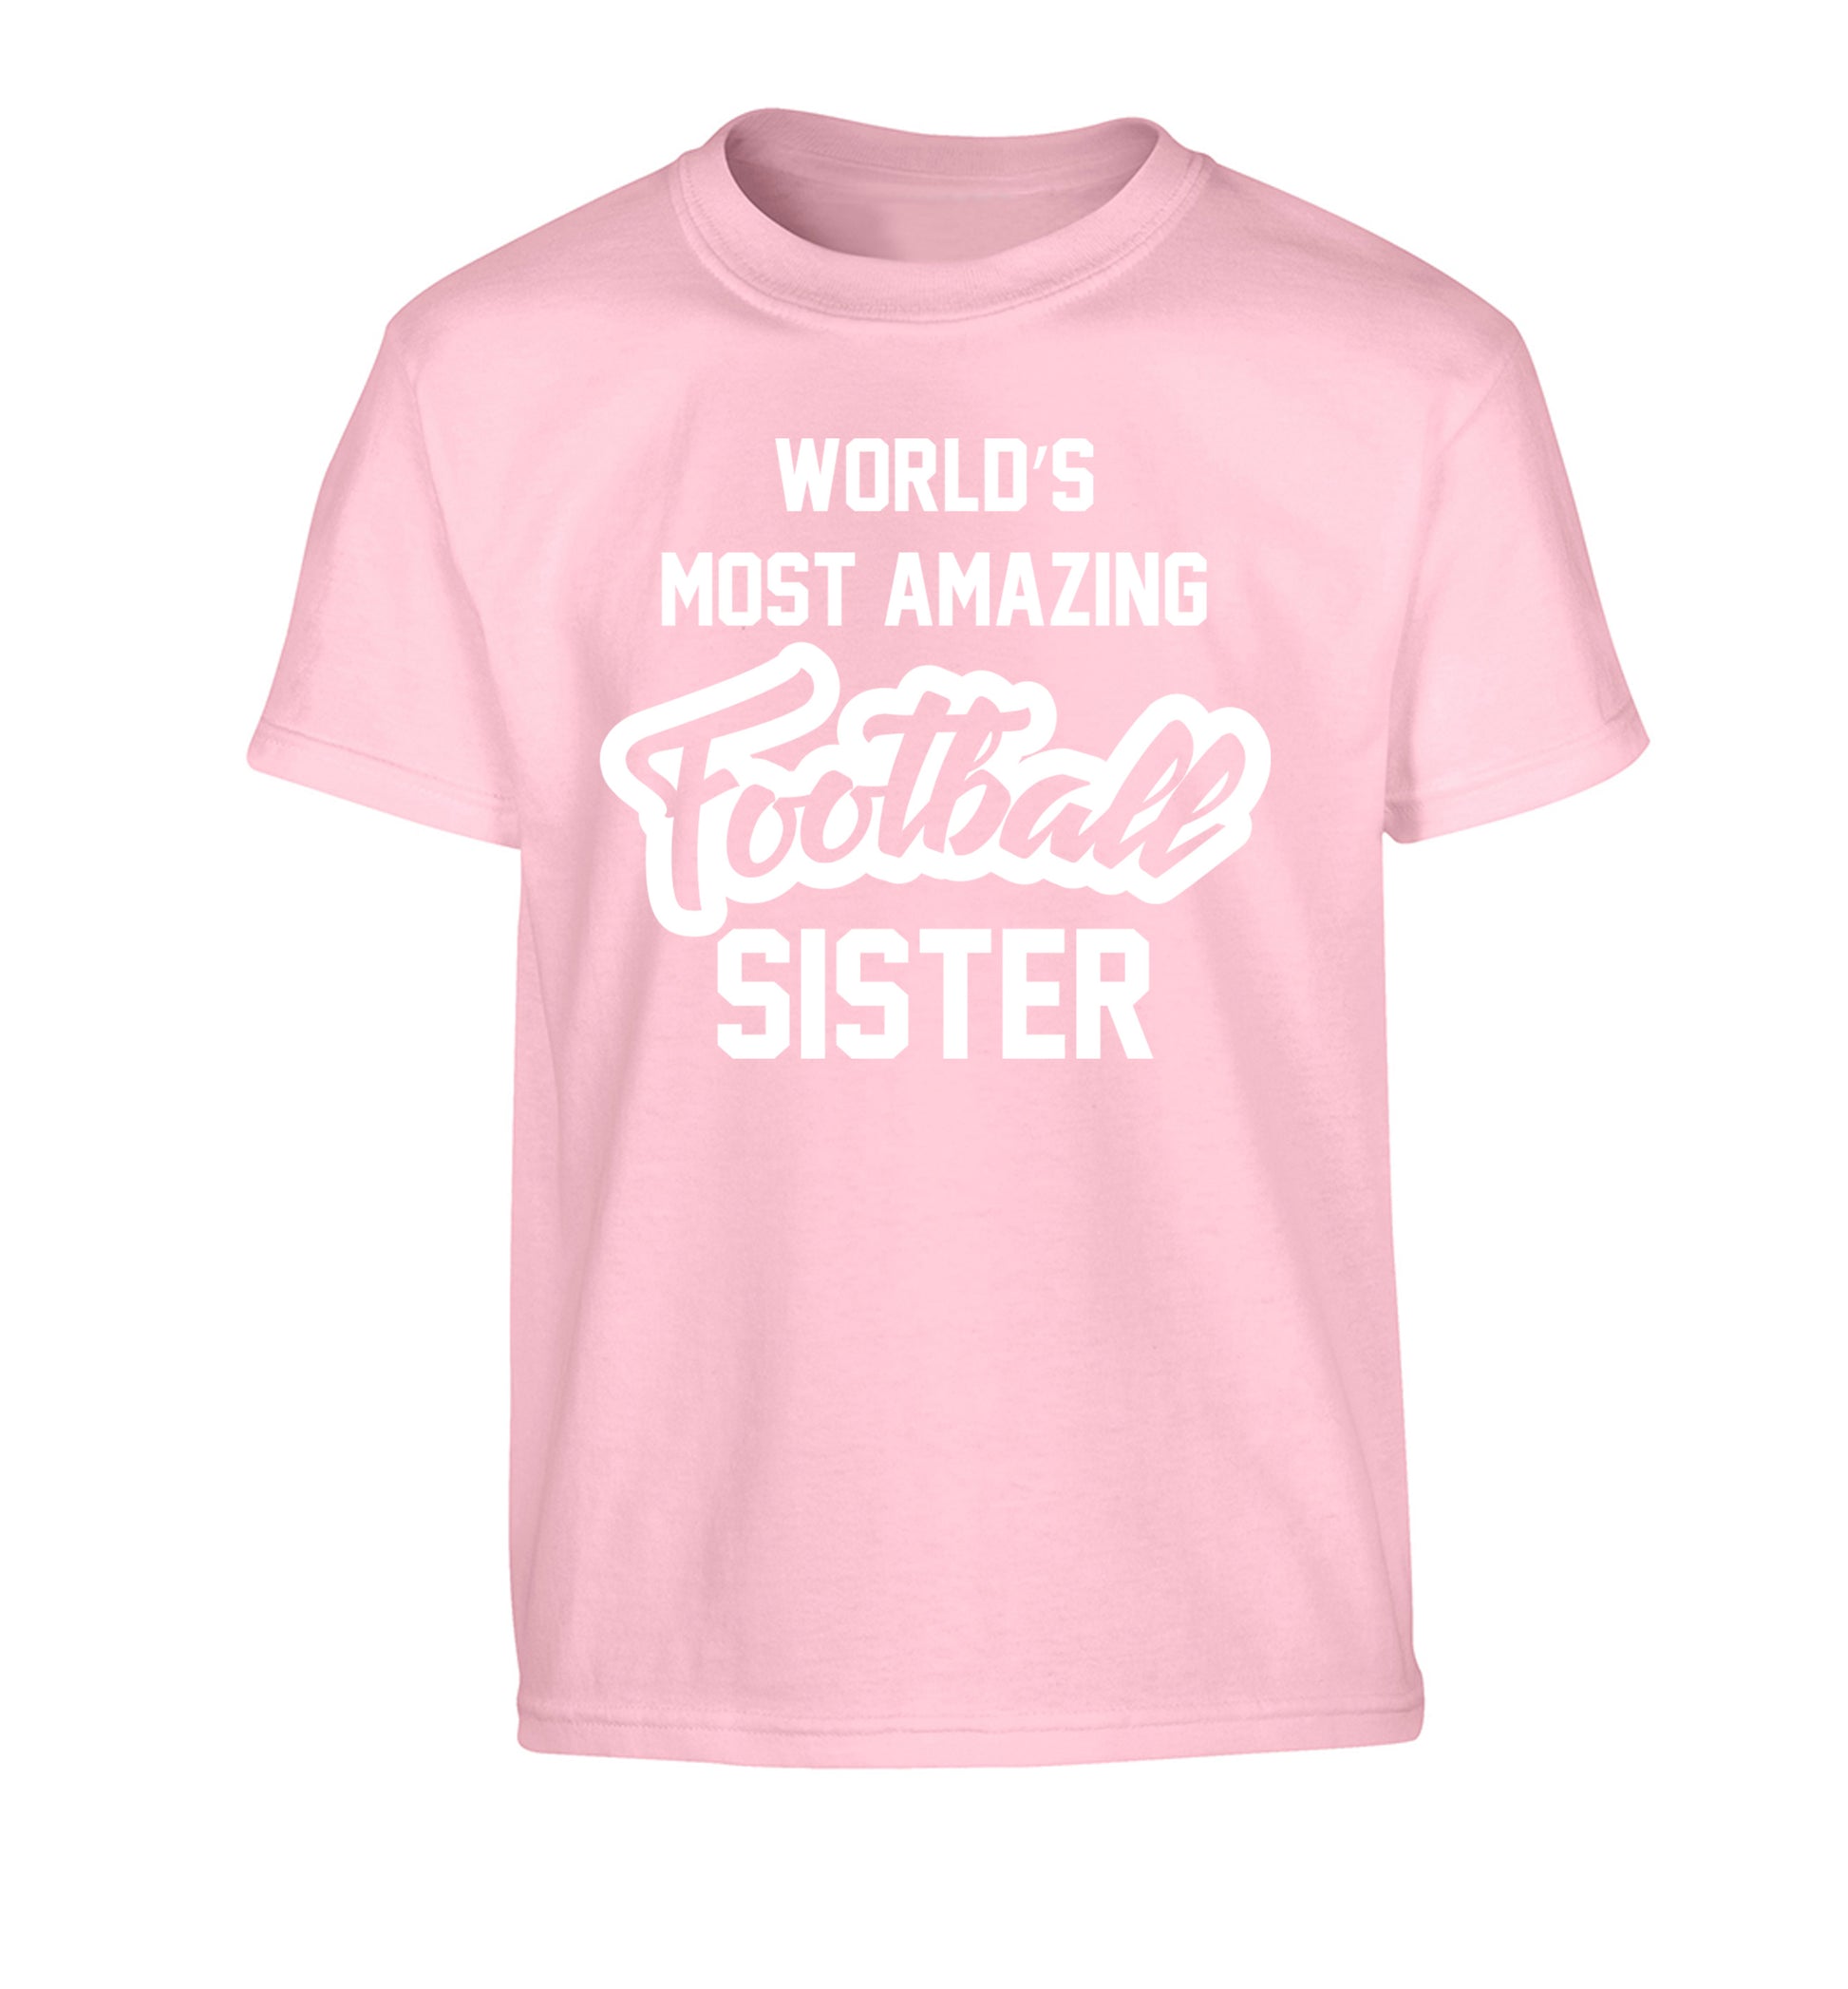 Worlds most amazing football sister Children's light pink Tshirt 12-14 Years